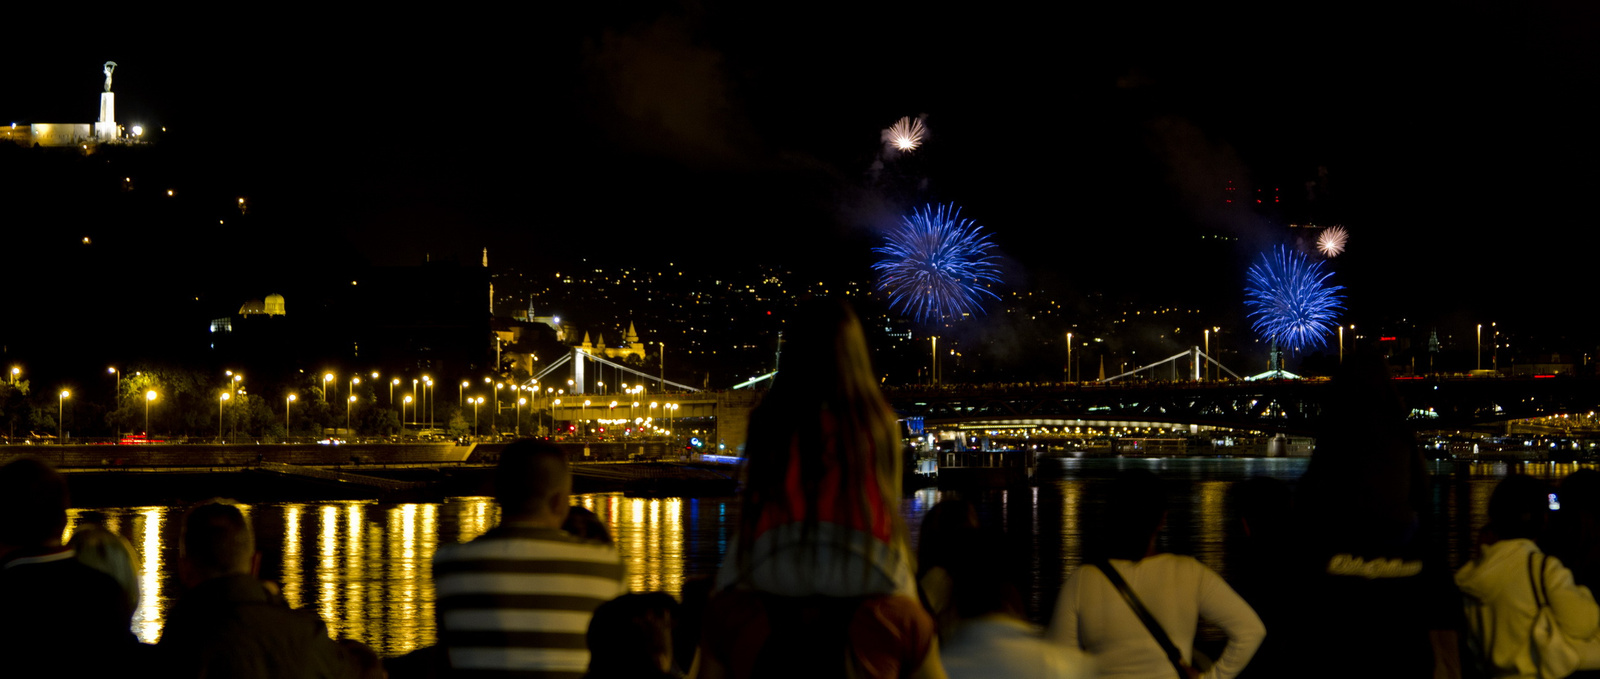 fireworks 0015